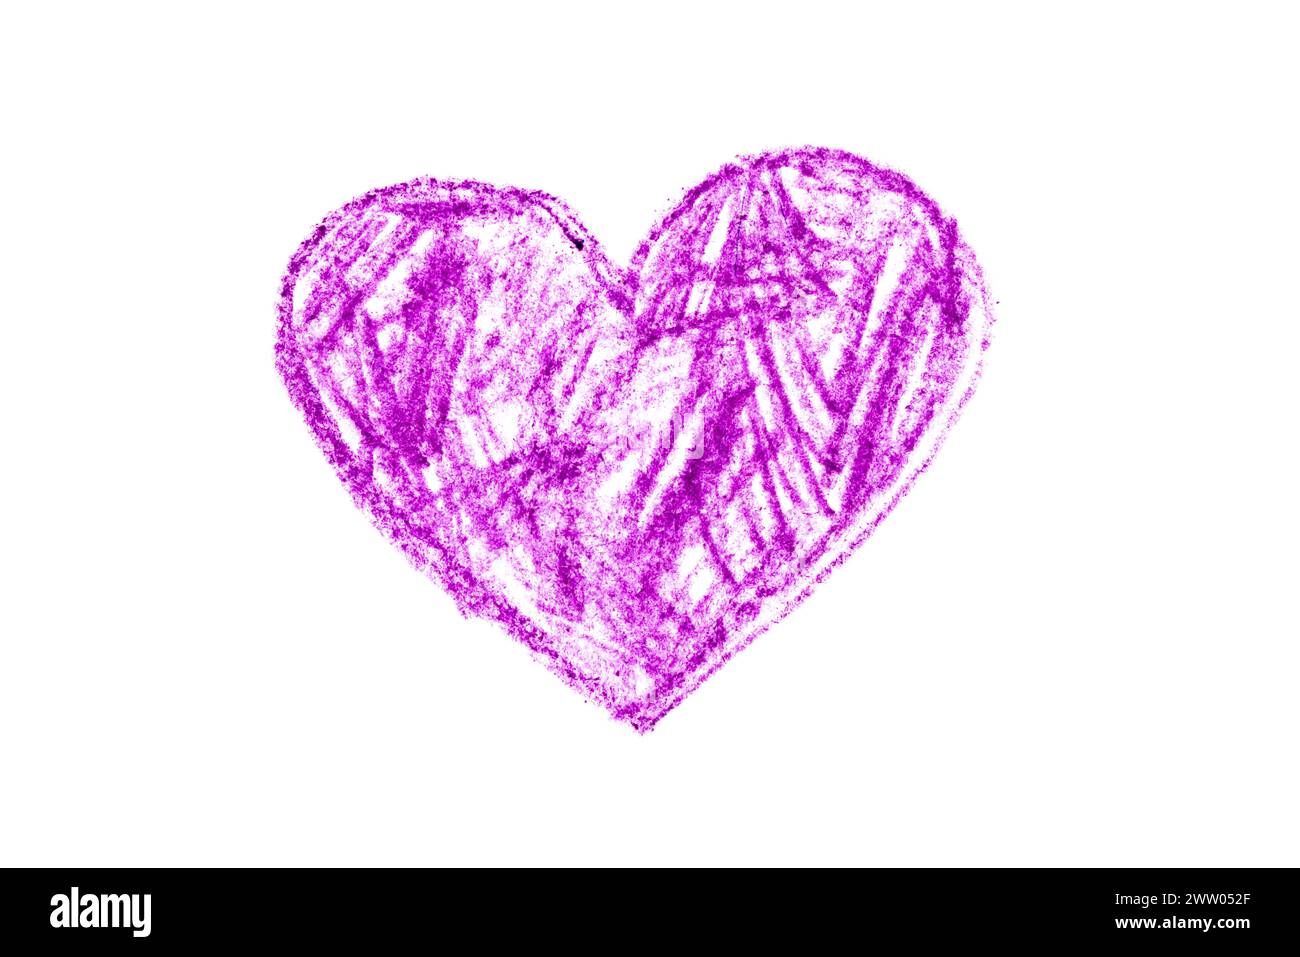 Una foto de un corazón púrpura dibujado a lápiz. Foto de stock